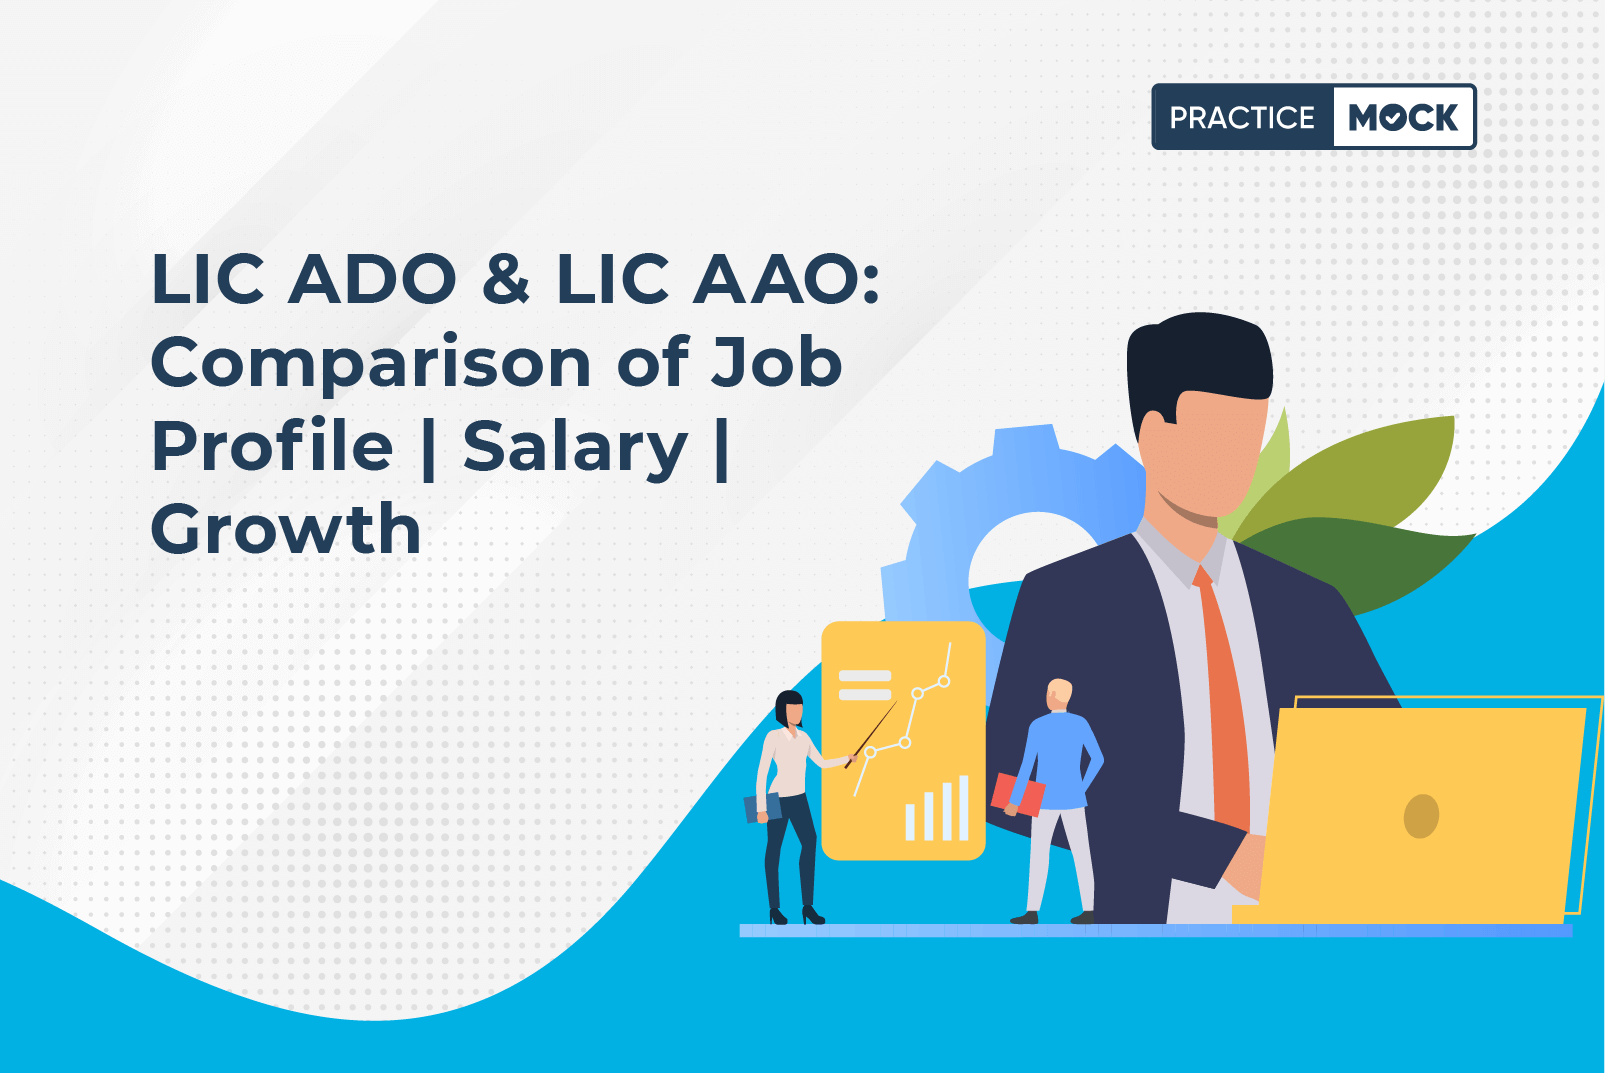 LIC ADO & LIC AAO Comparison of Job Profile Salary Growth